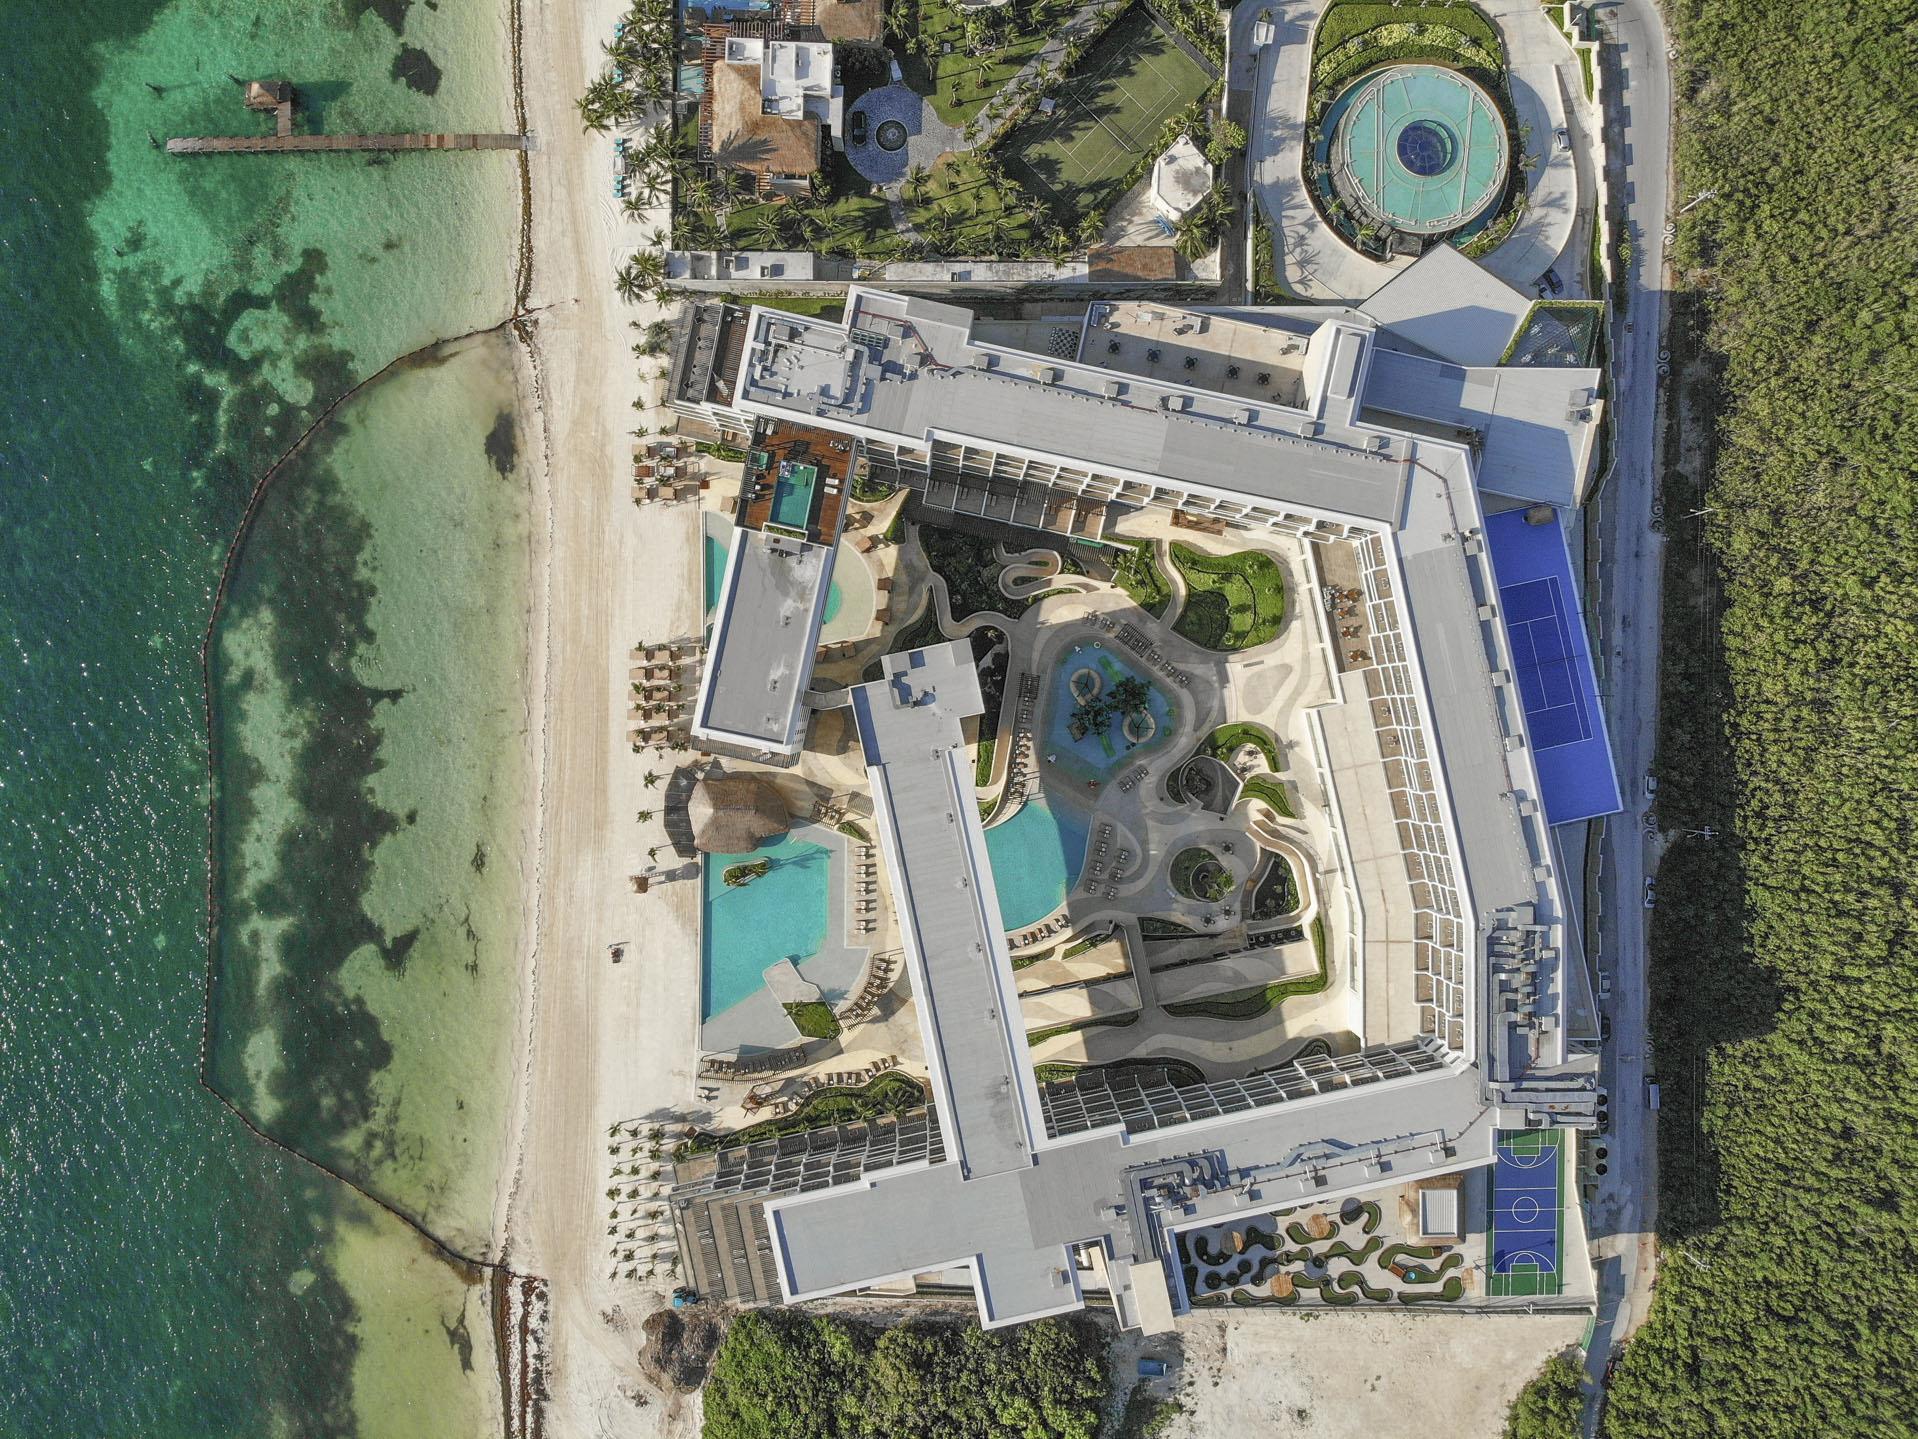 Sensira Resort & Spa Riviera Maya in Cancun, MX